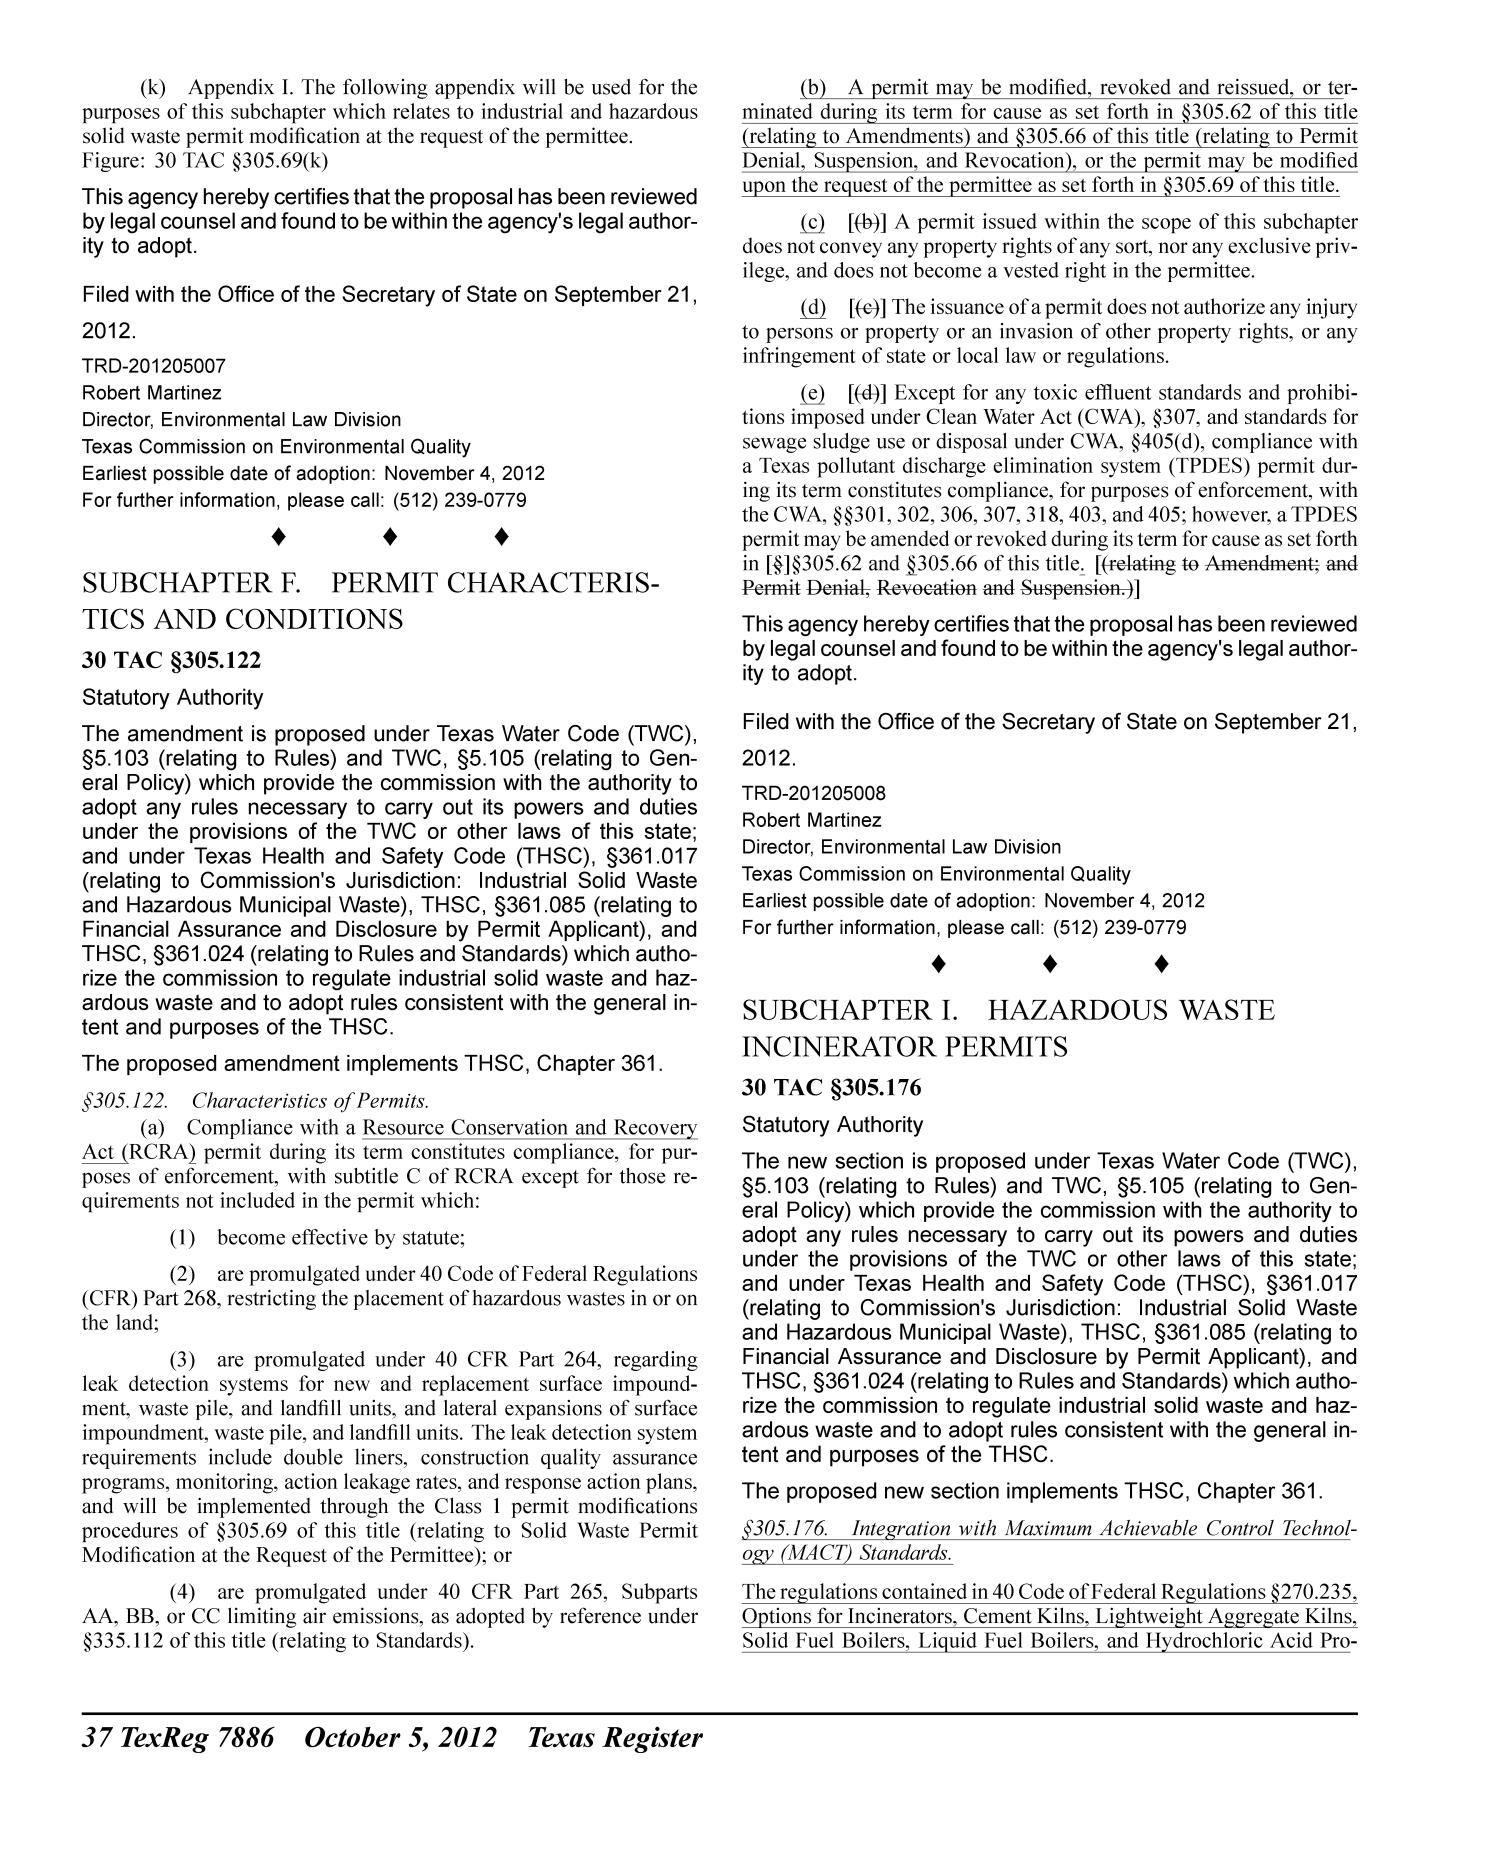 Texas Register, Volume 37, Number 40, Pages 7815-8094, October 5, 2012
                                                
                                                    7886
                                                